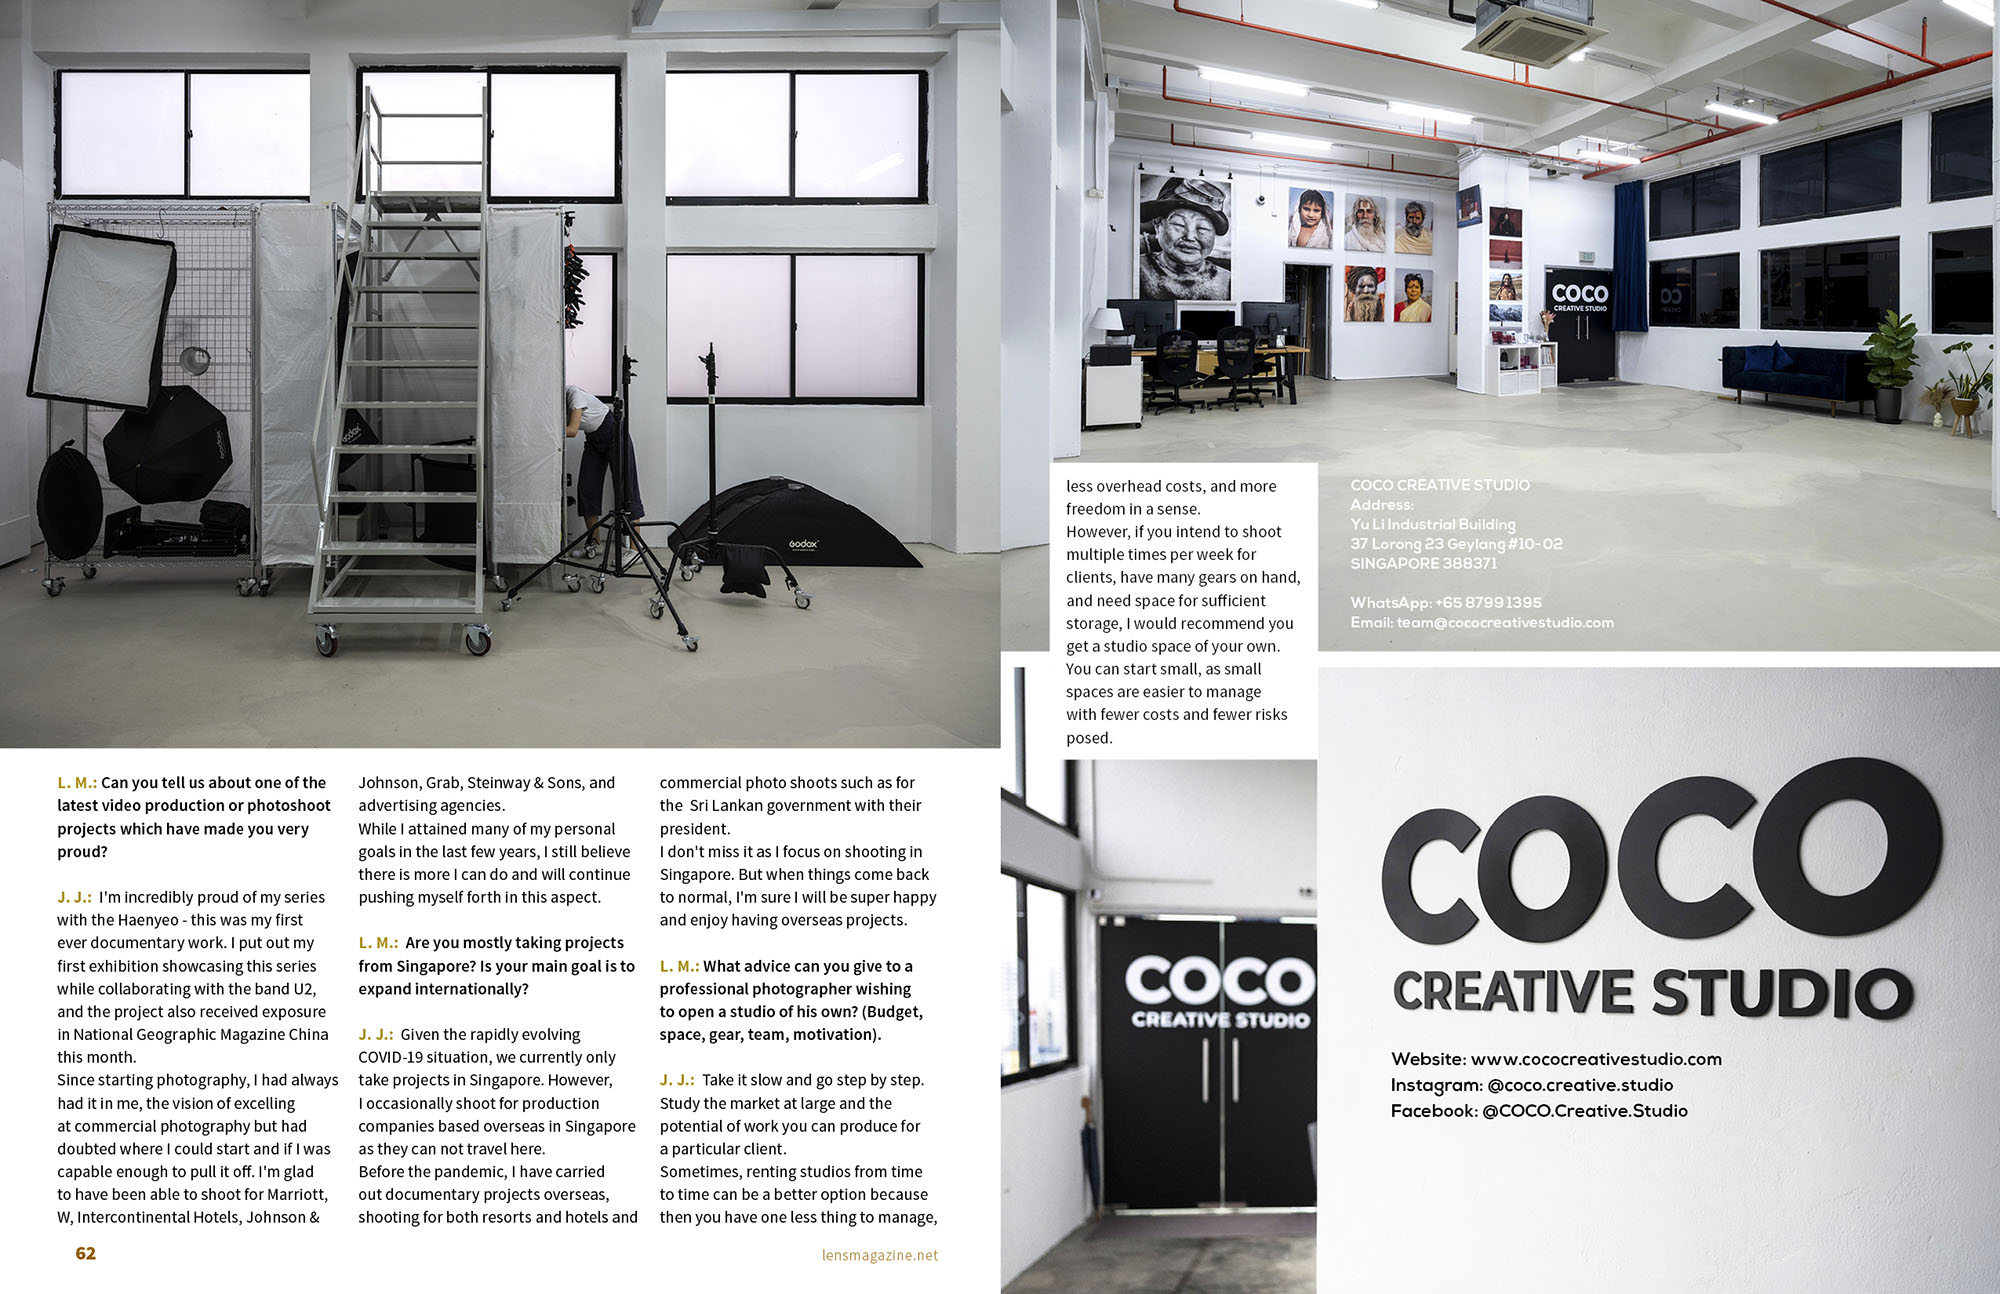 COCO Creative Studio Lens Magazine Photography Videography Services Singapore 6